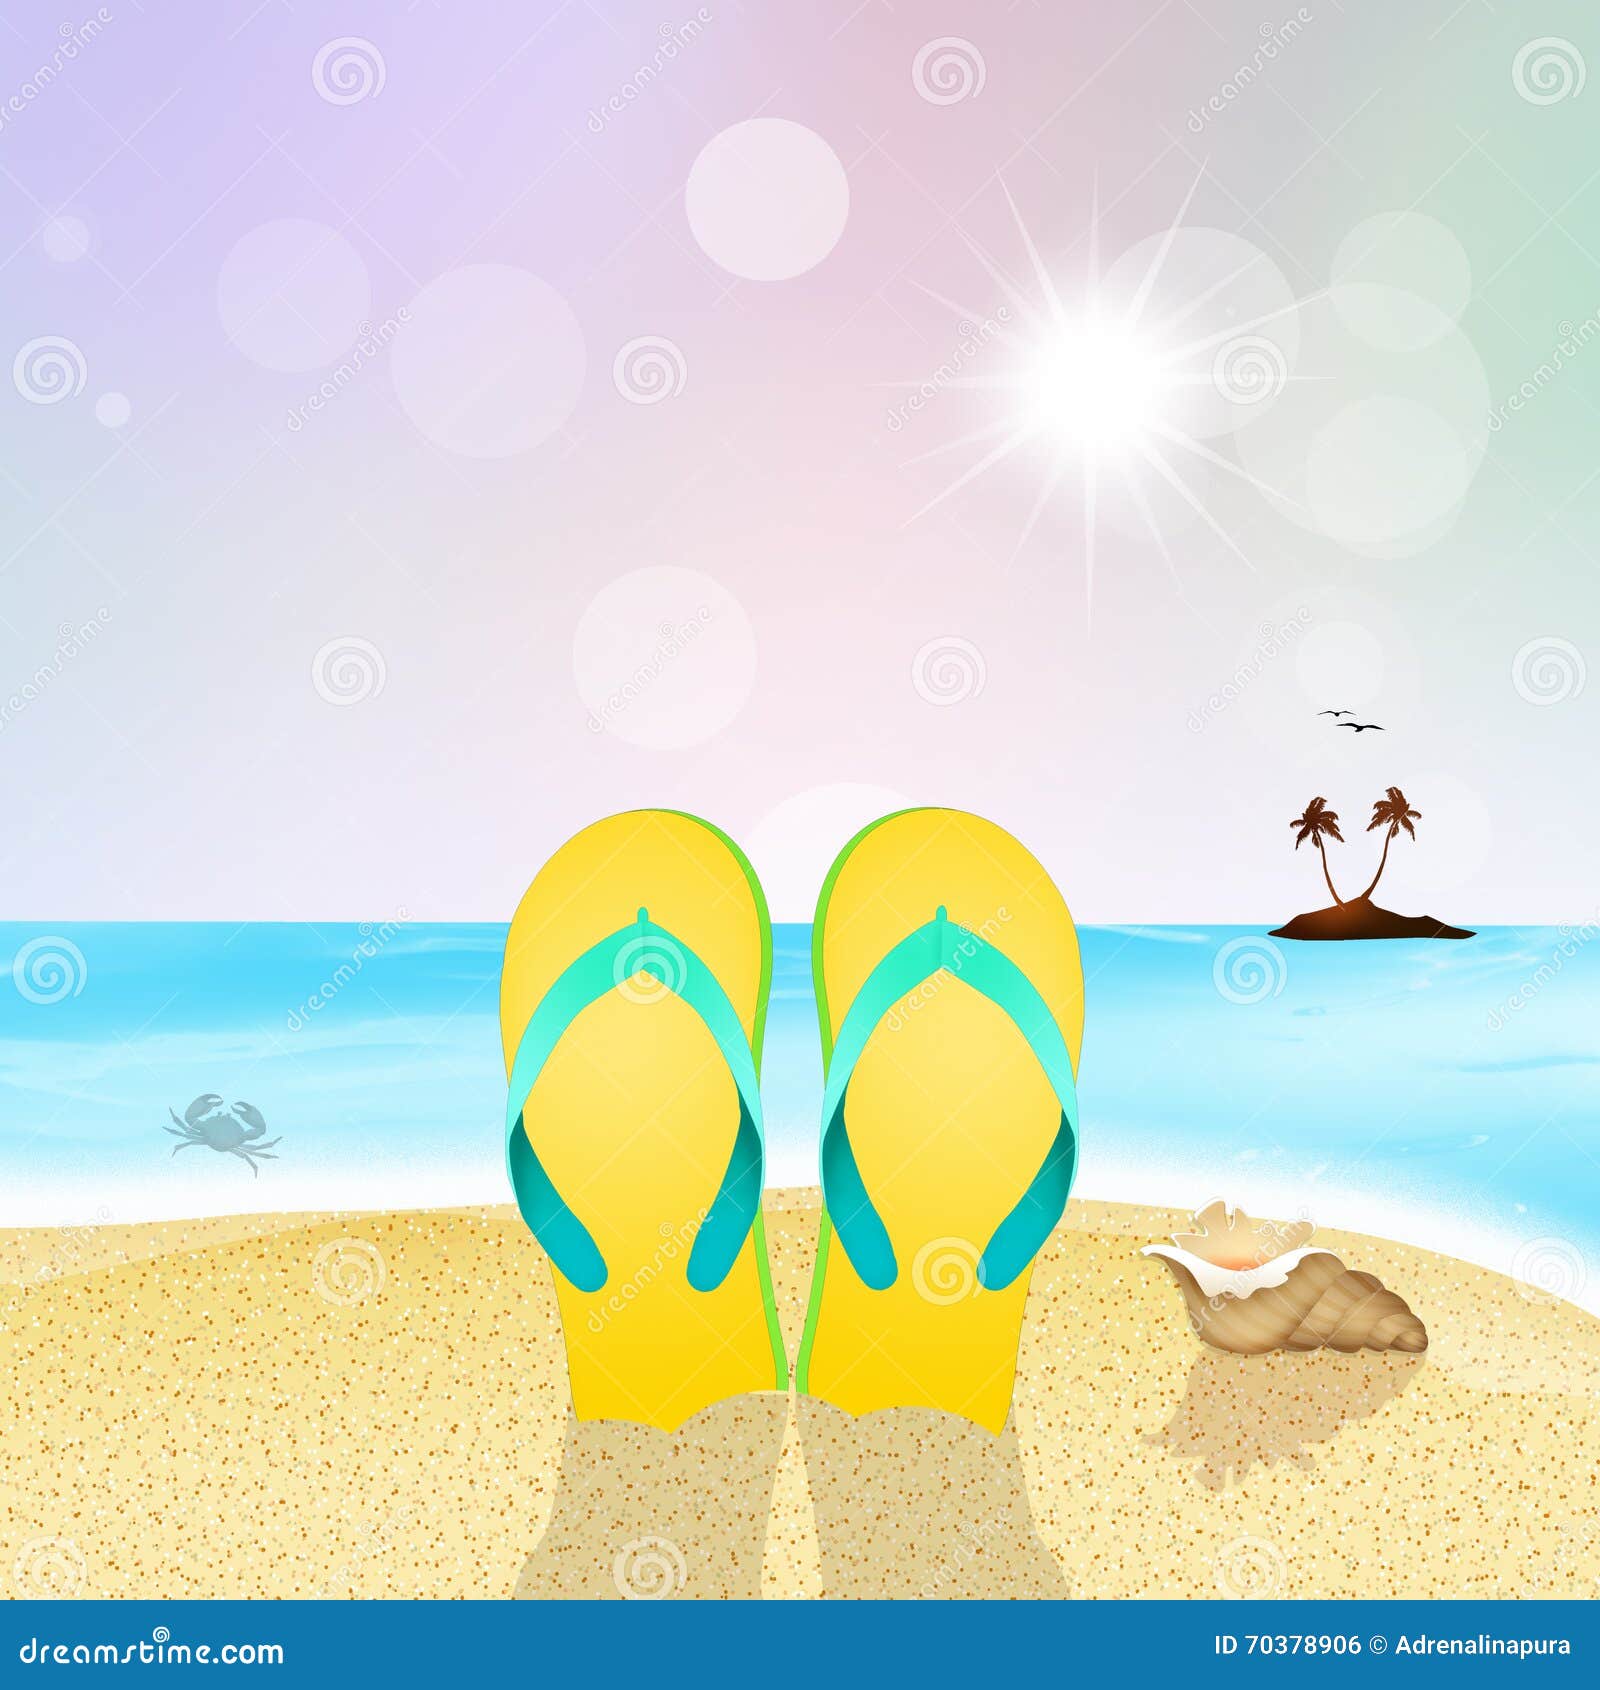 Flip flops on the beach stock illustration. Illustration of flippers ...